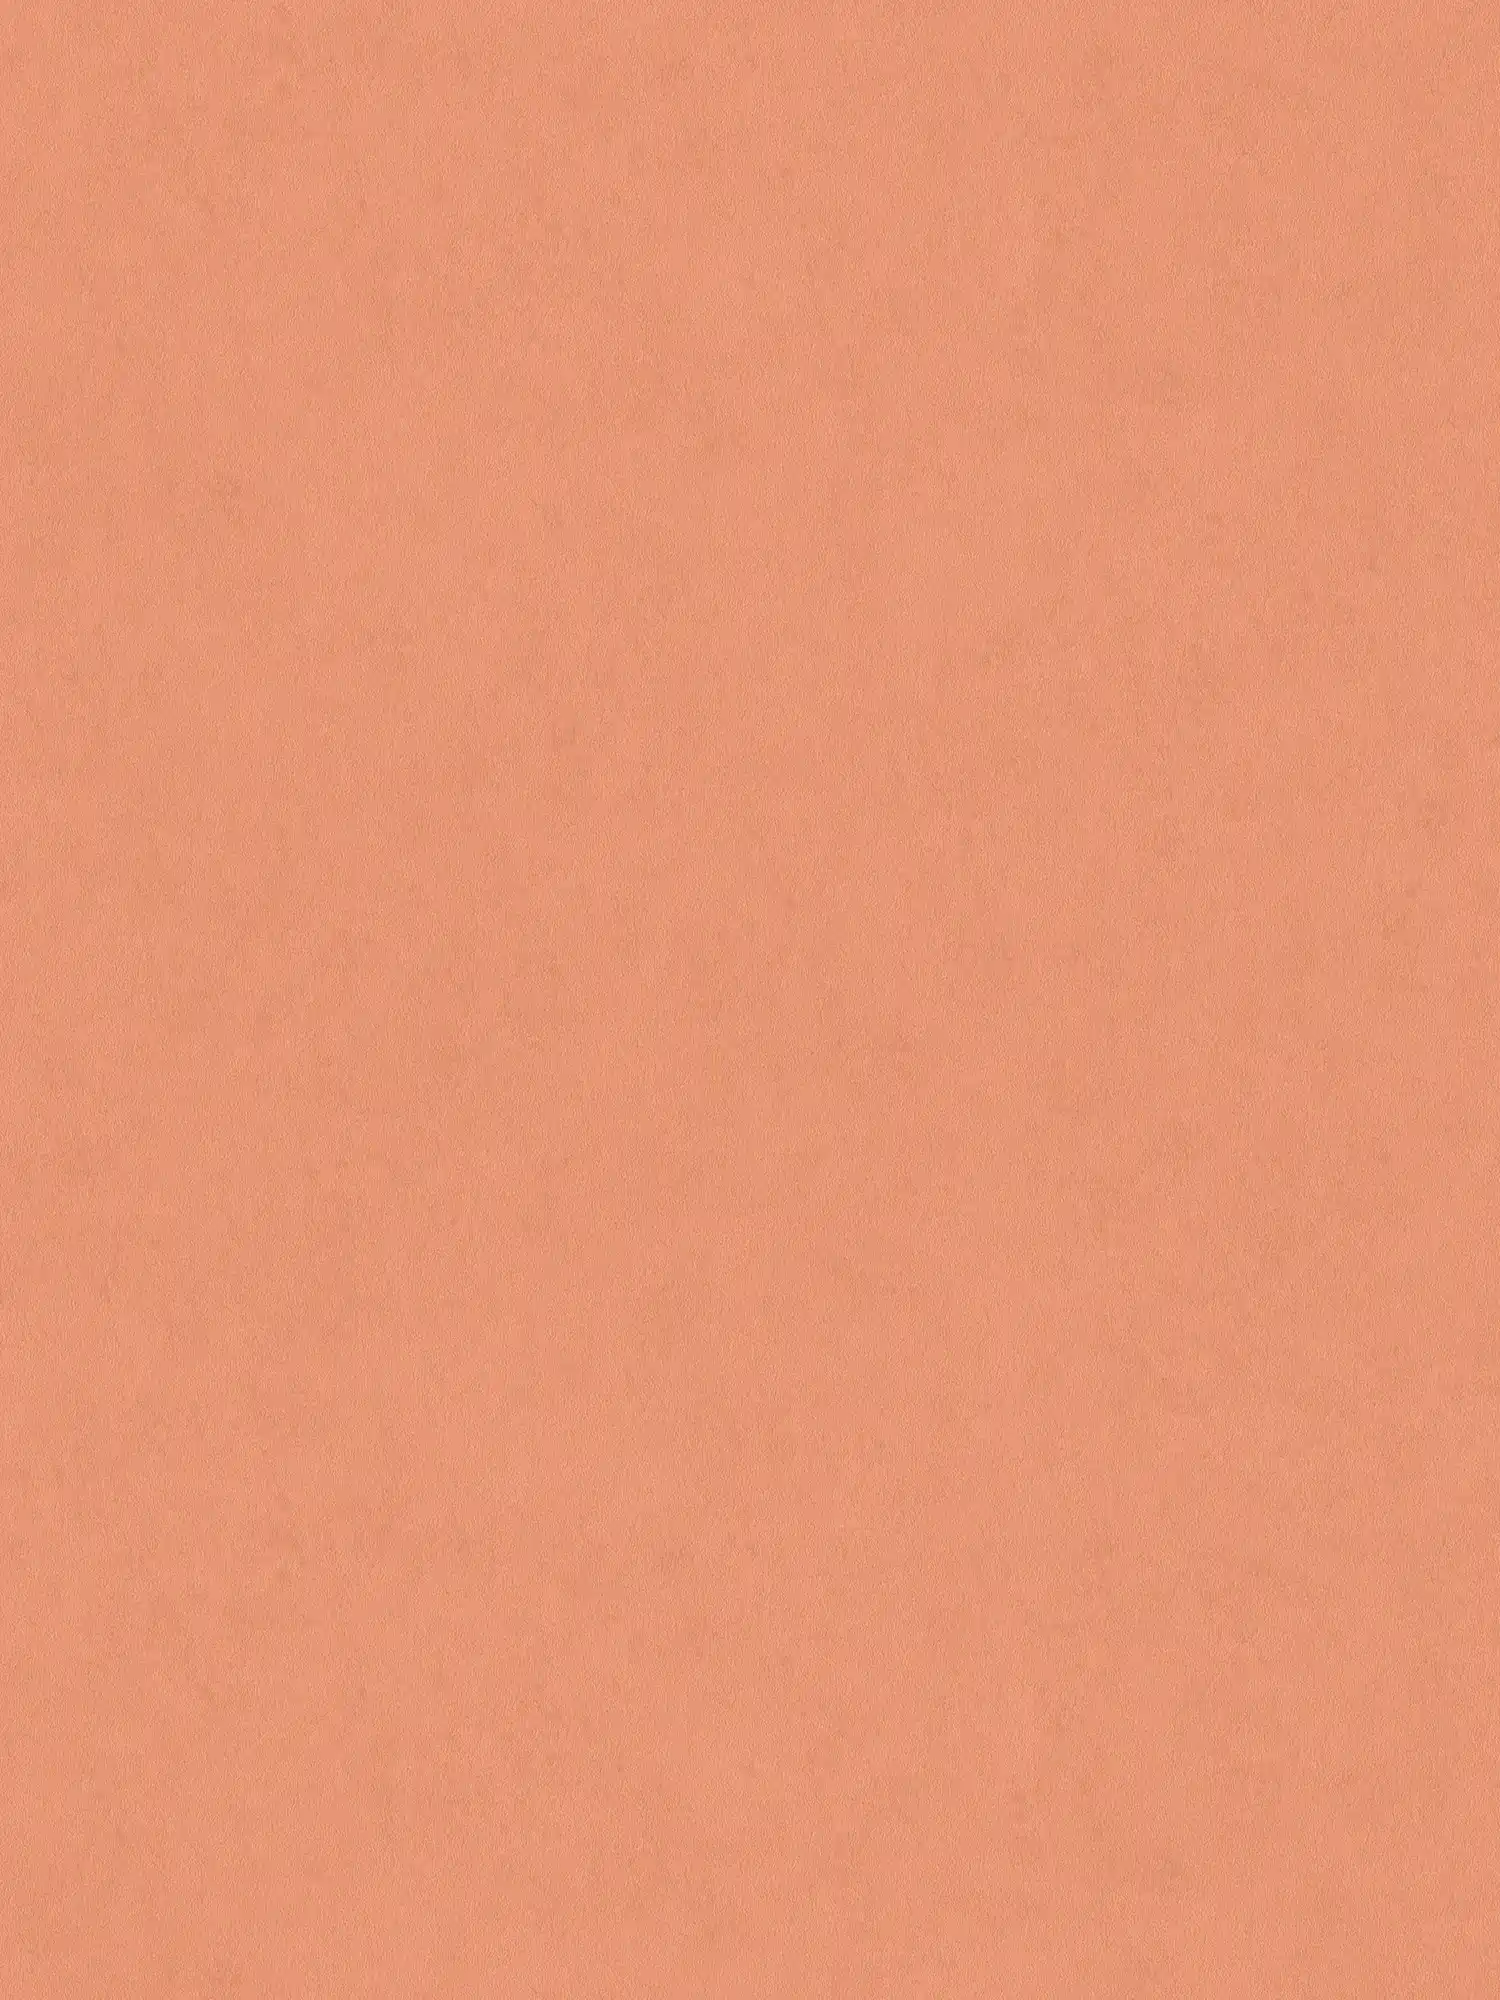 Plain plain wallpaper - orange
